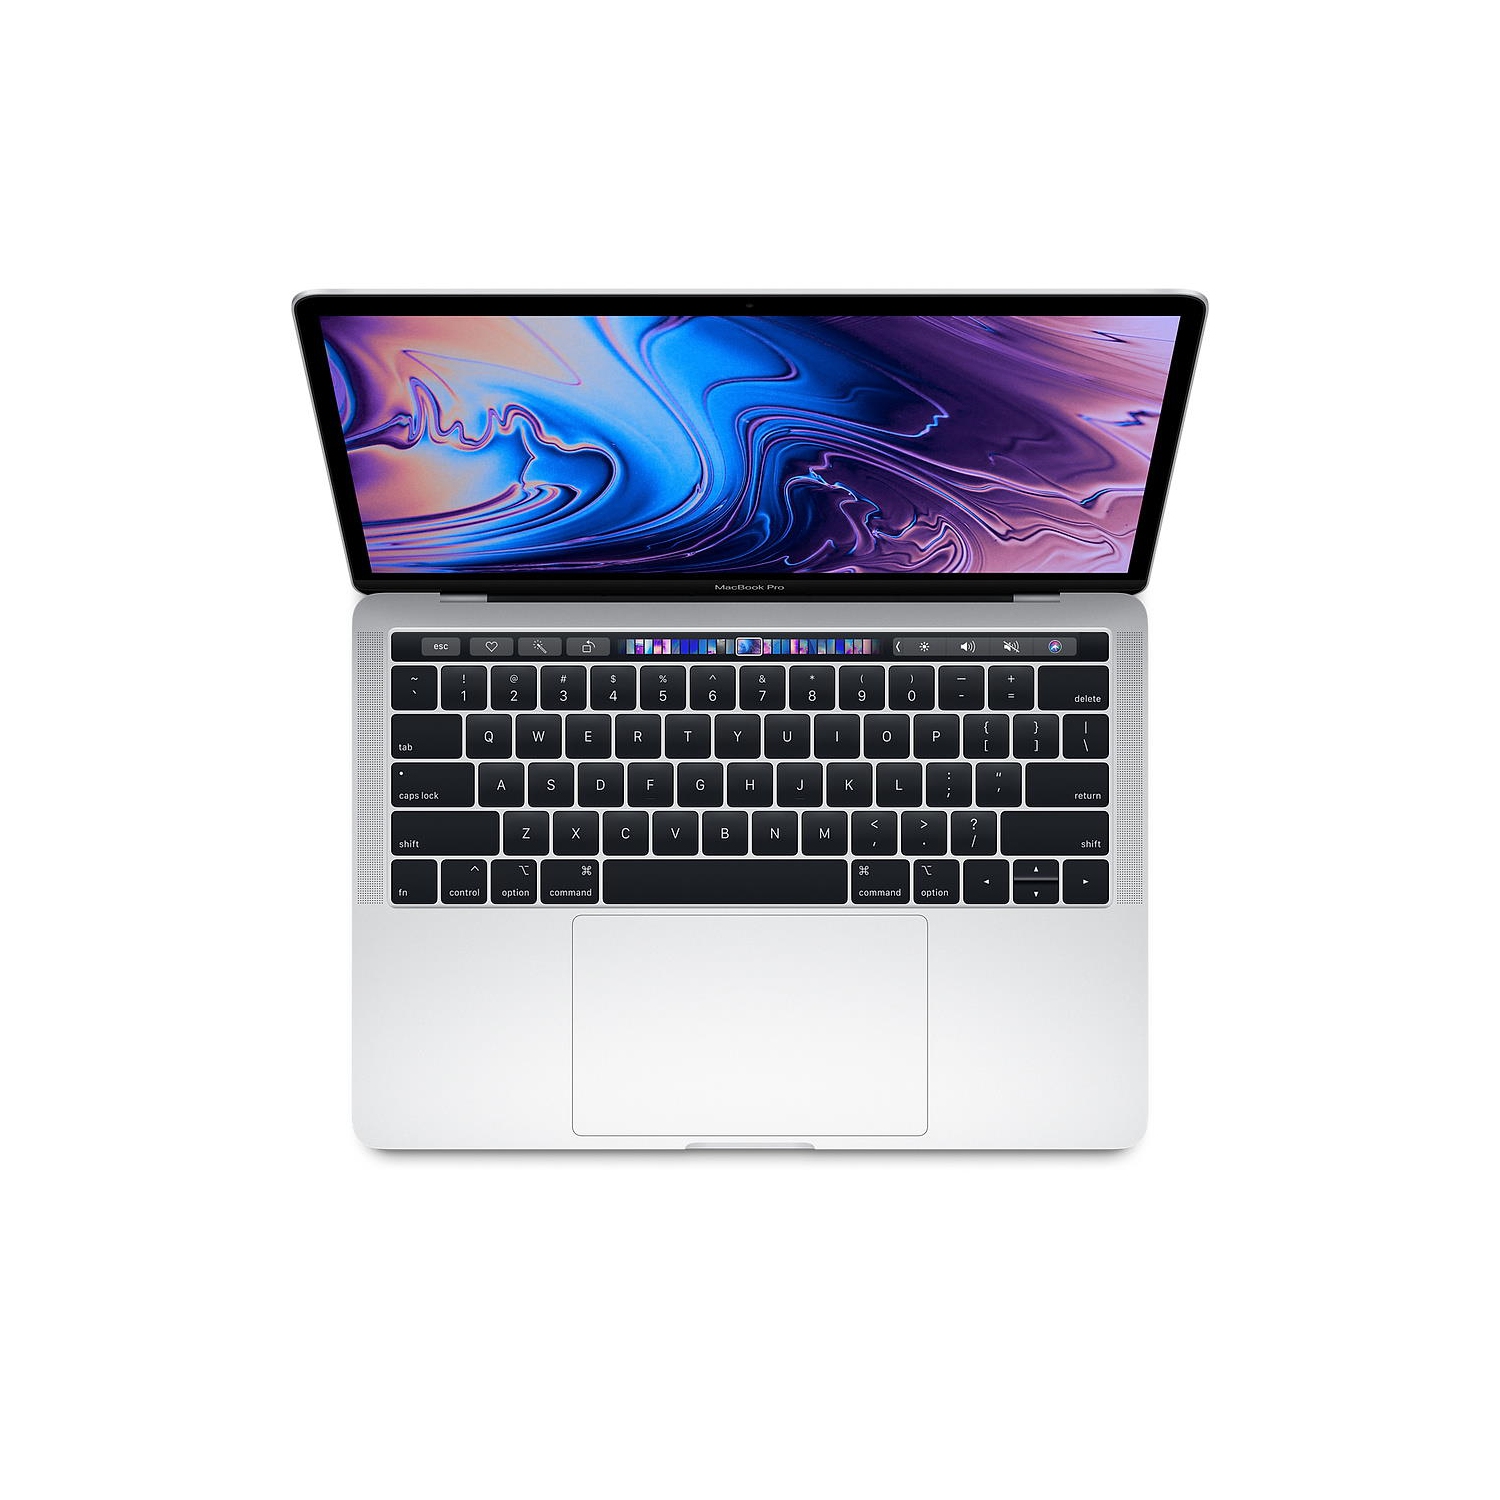 Refurbished - Excellent) Macbook Pro 13.3-inch (Silver, 1yr 